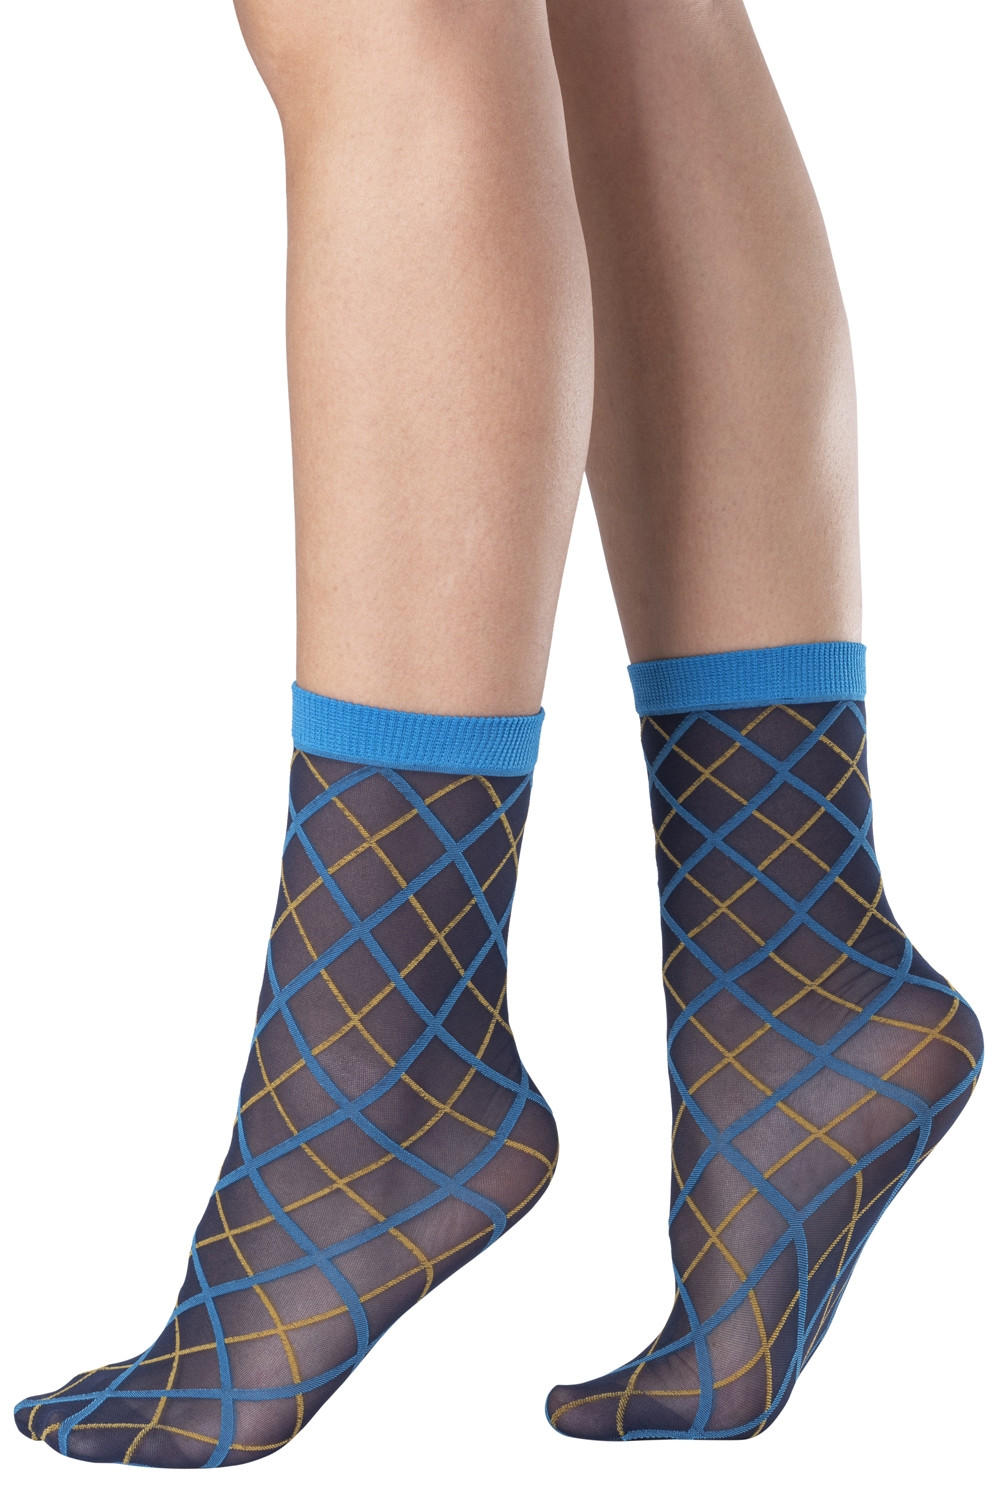 Socks for Women, Ladies colourful socks, cotton & printed ankle socks